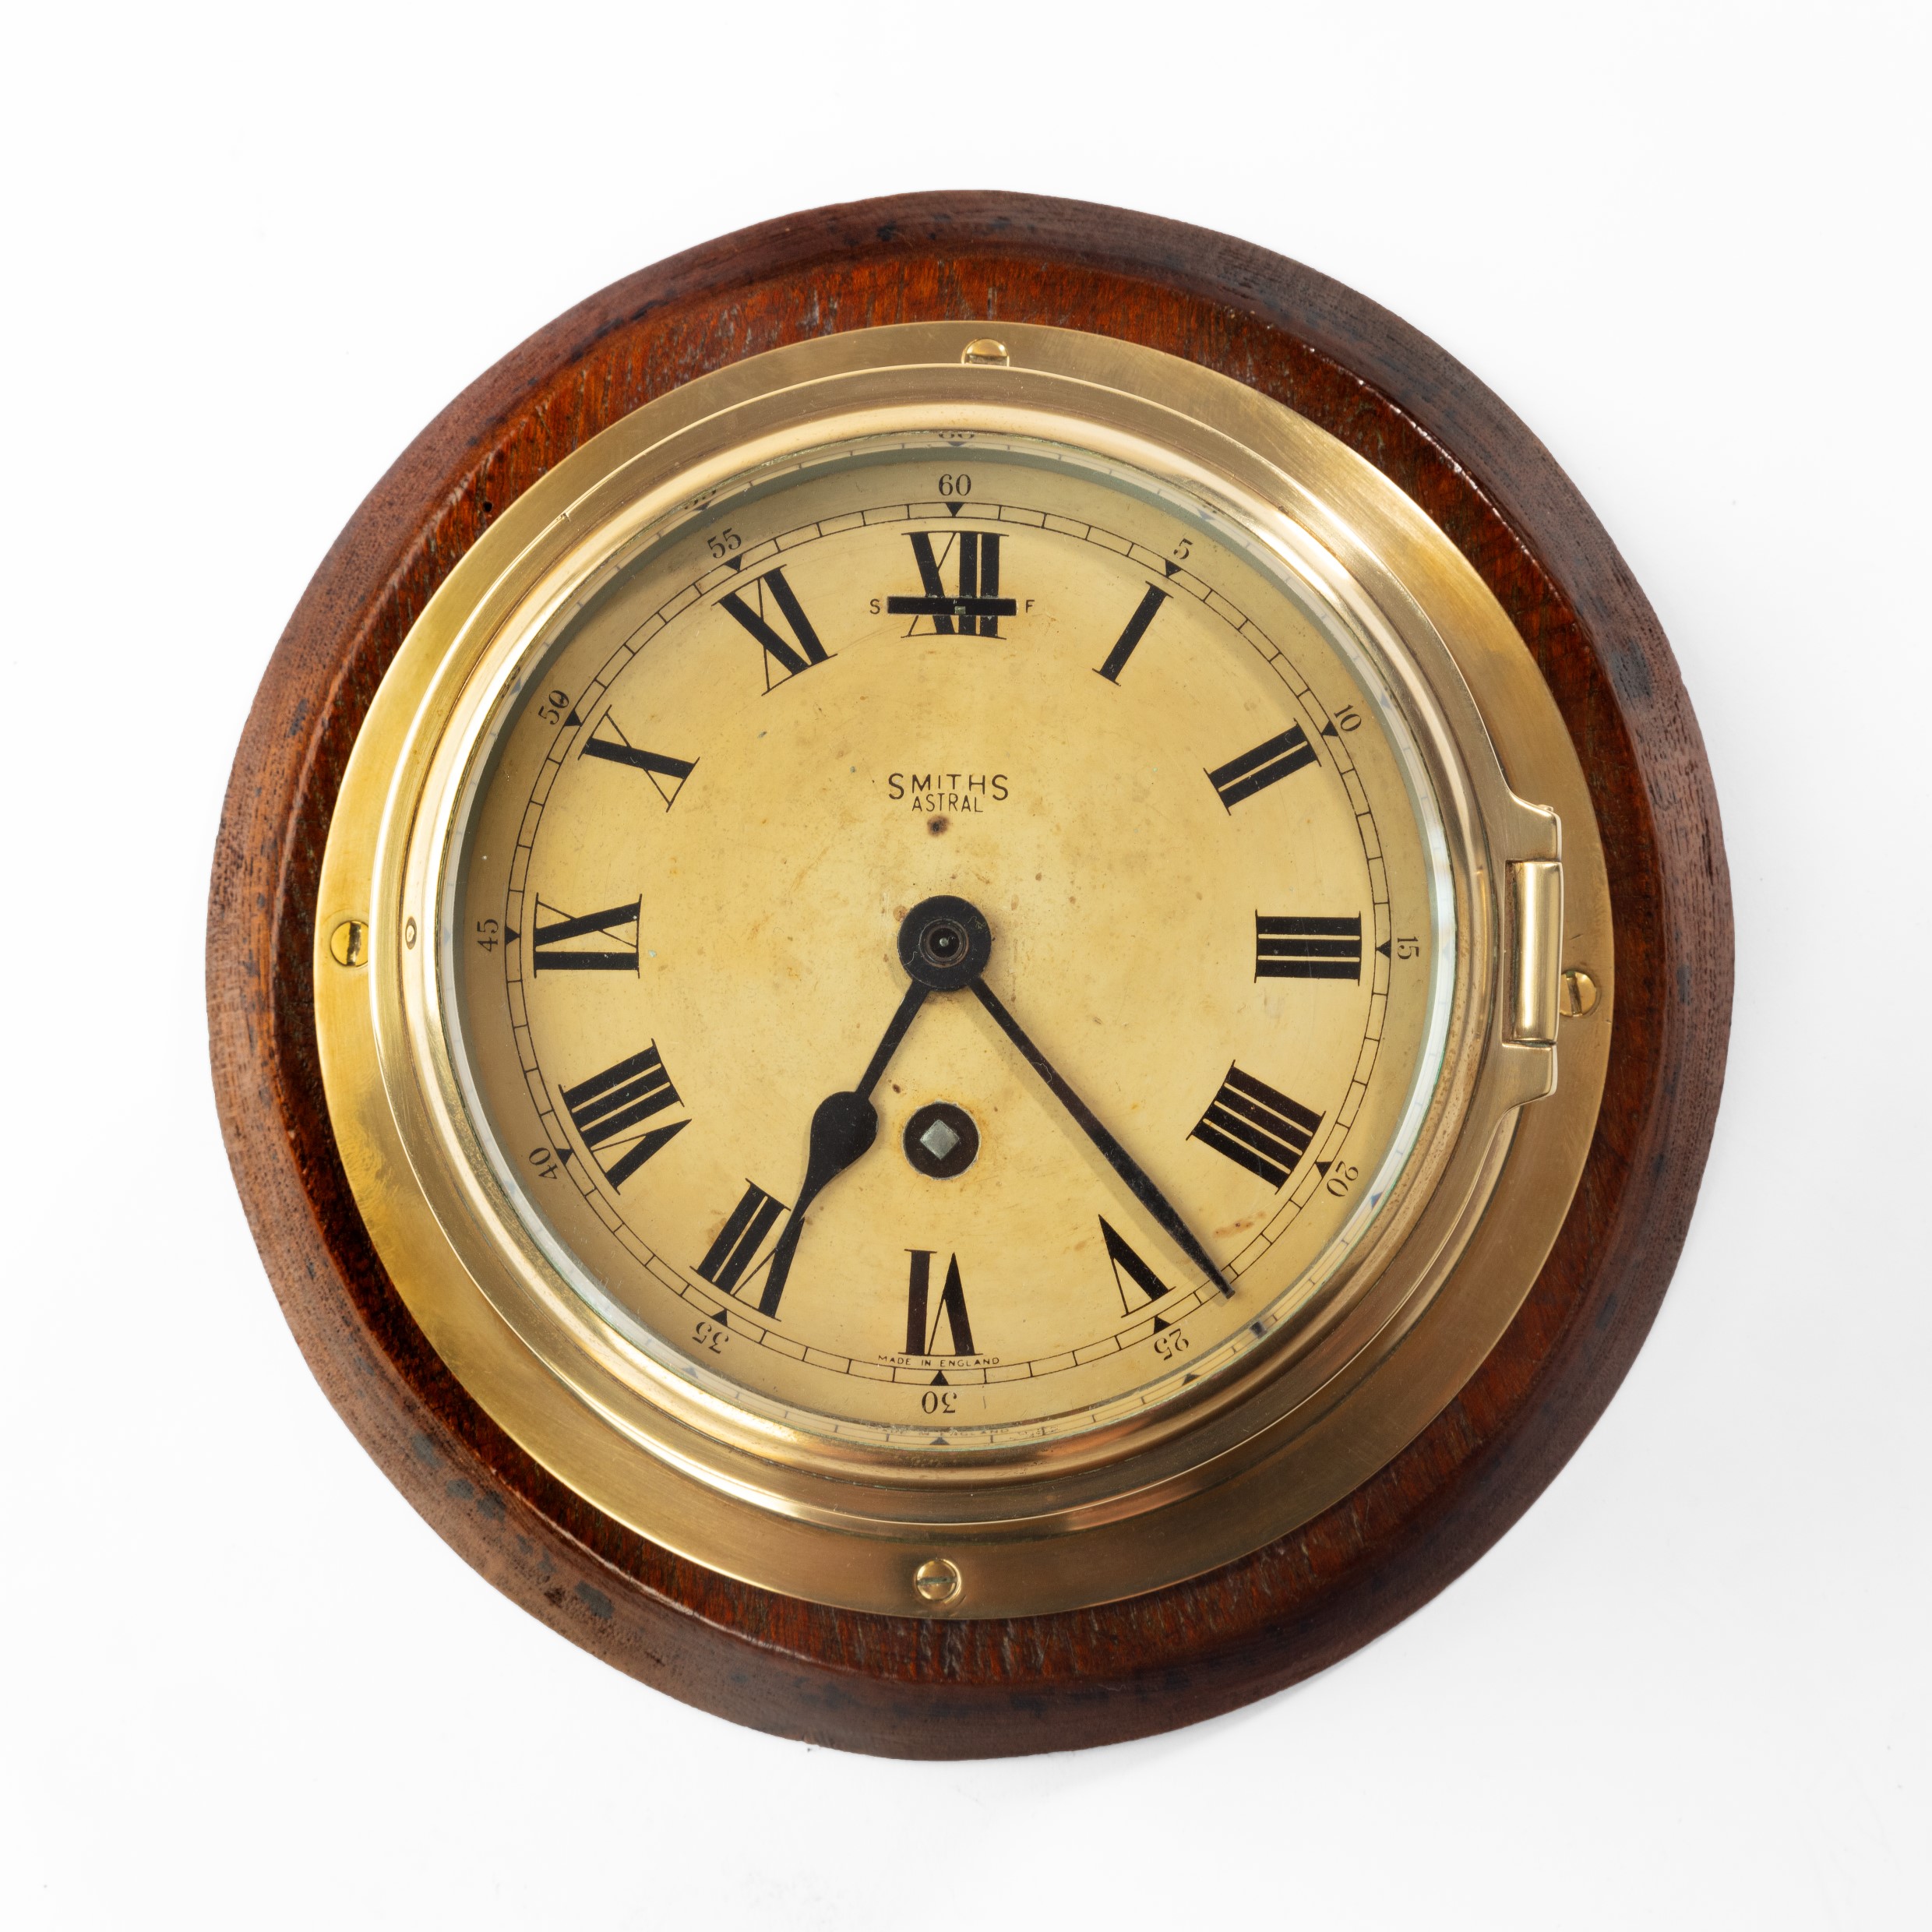 A Smiths Astral brass bulkhead clock